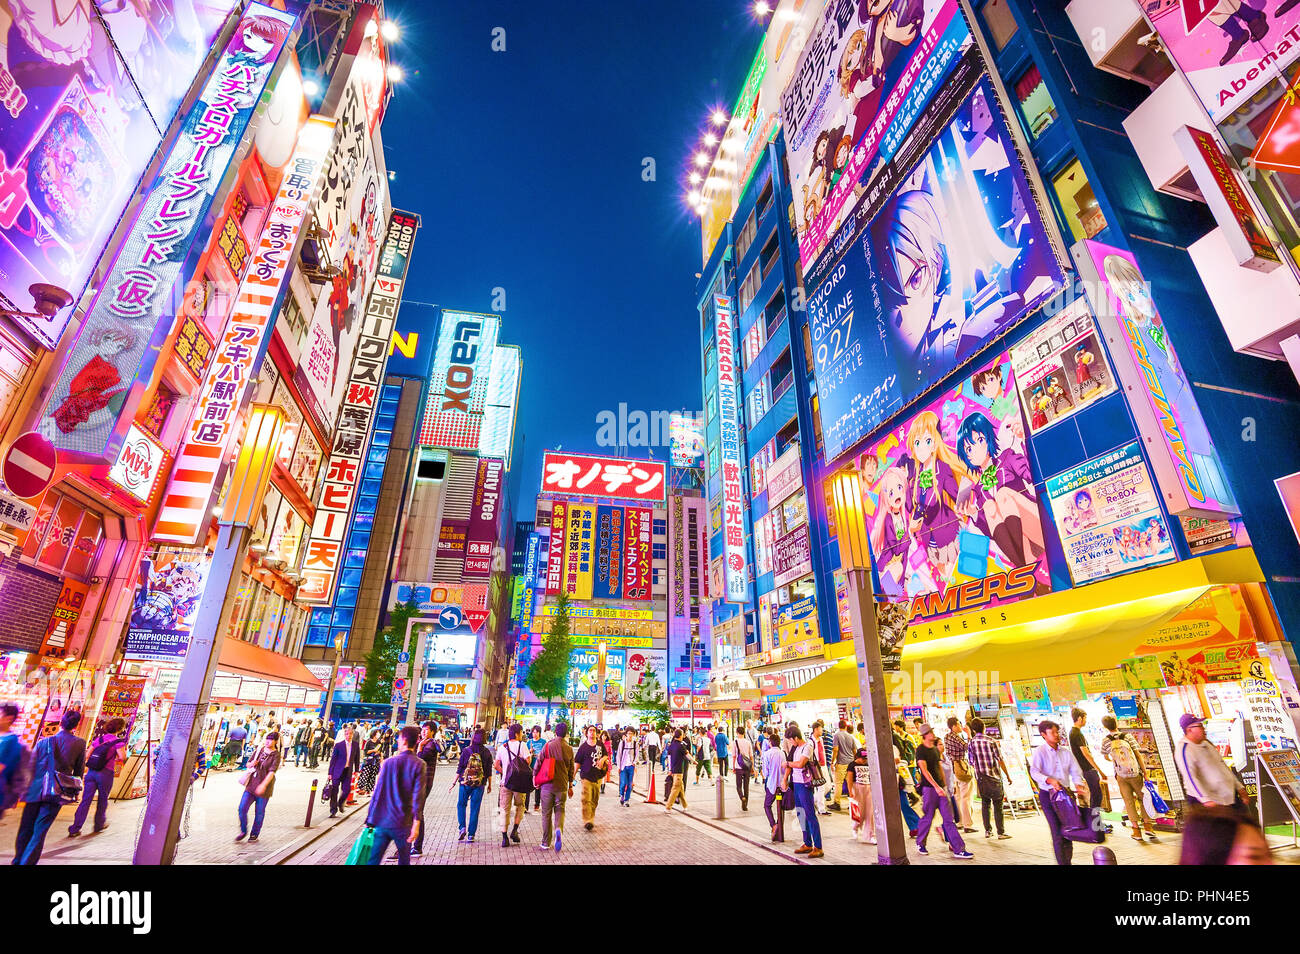 Akihabara Tokyo Electric Town Japan Billboards Stock Photo